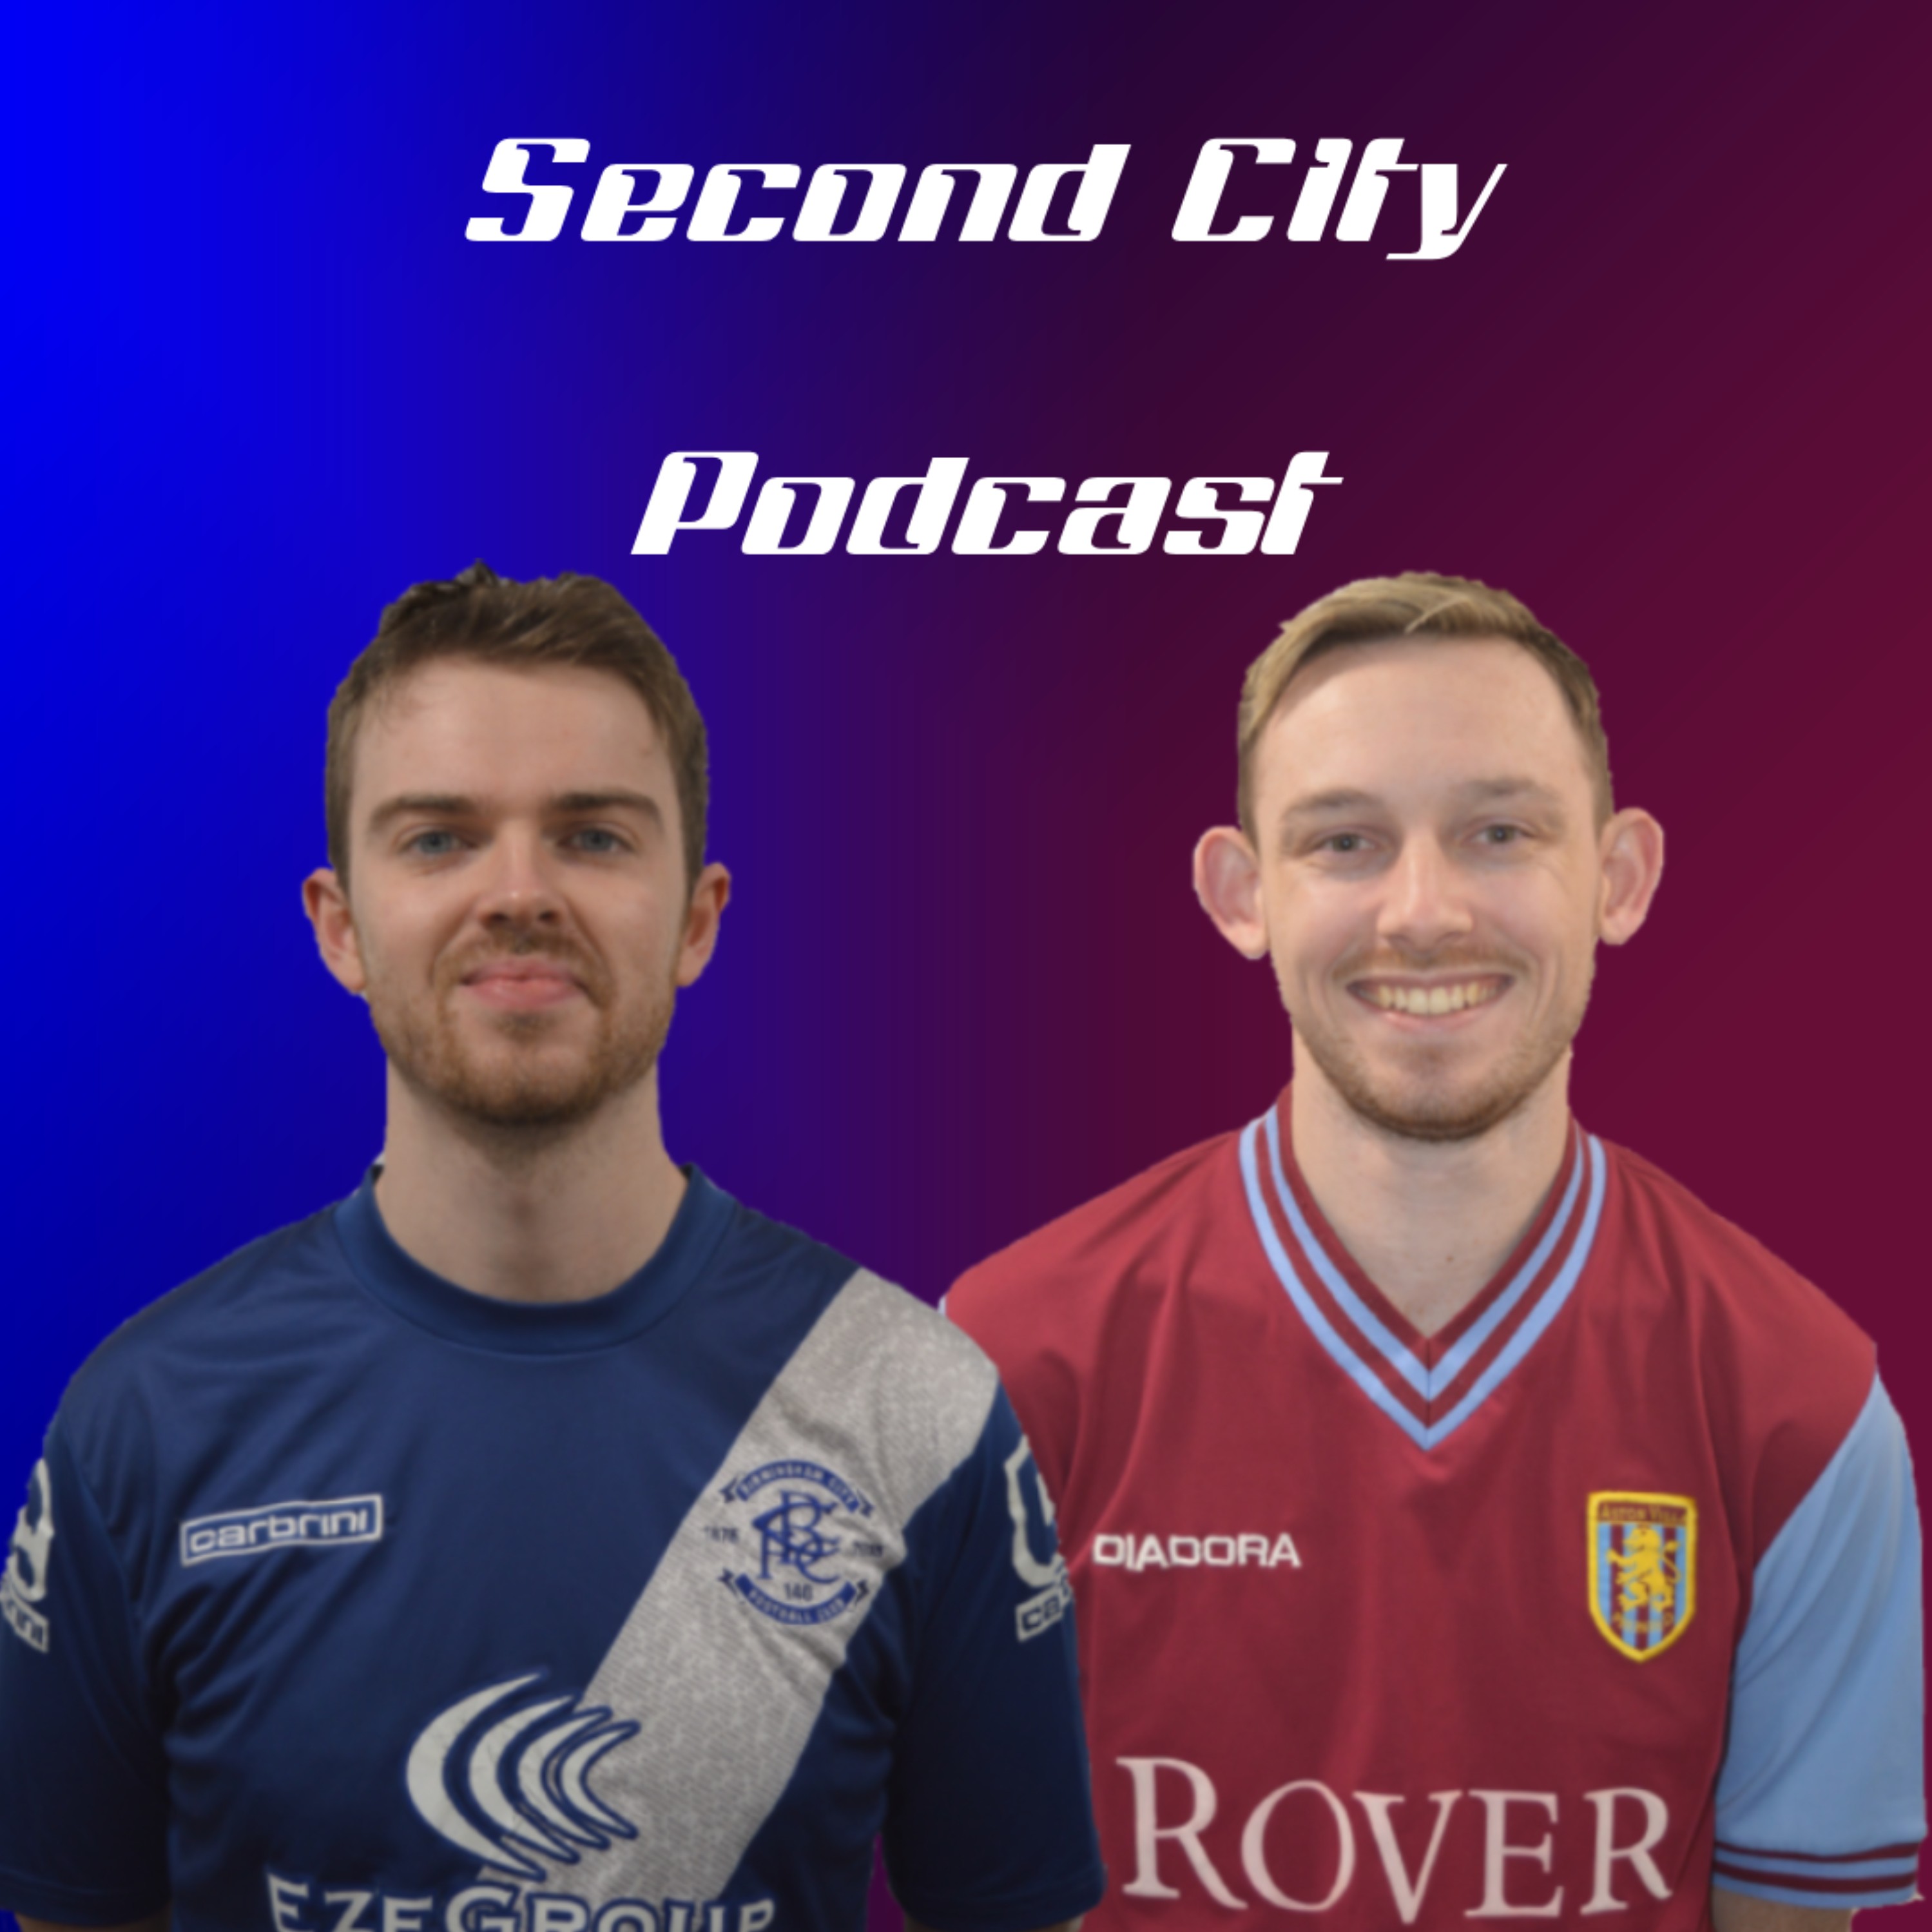 Second City Podcast